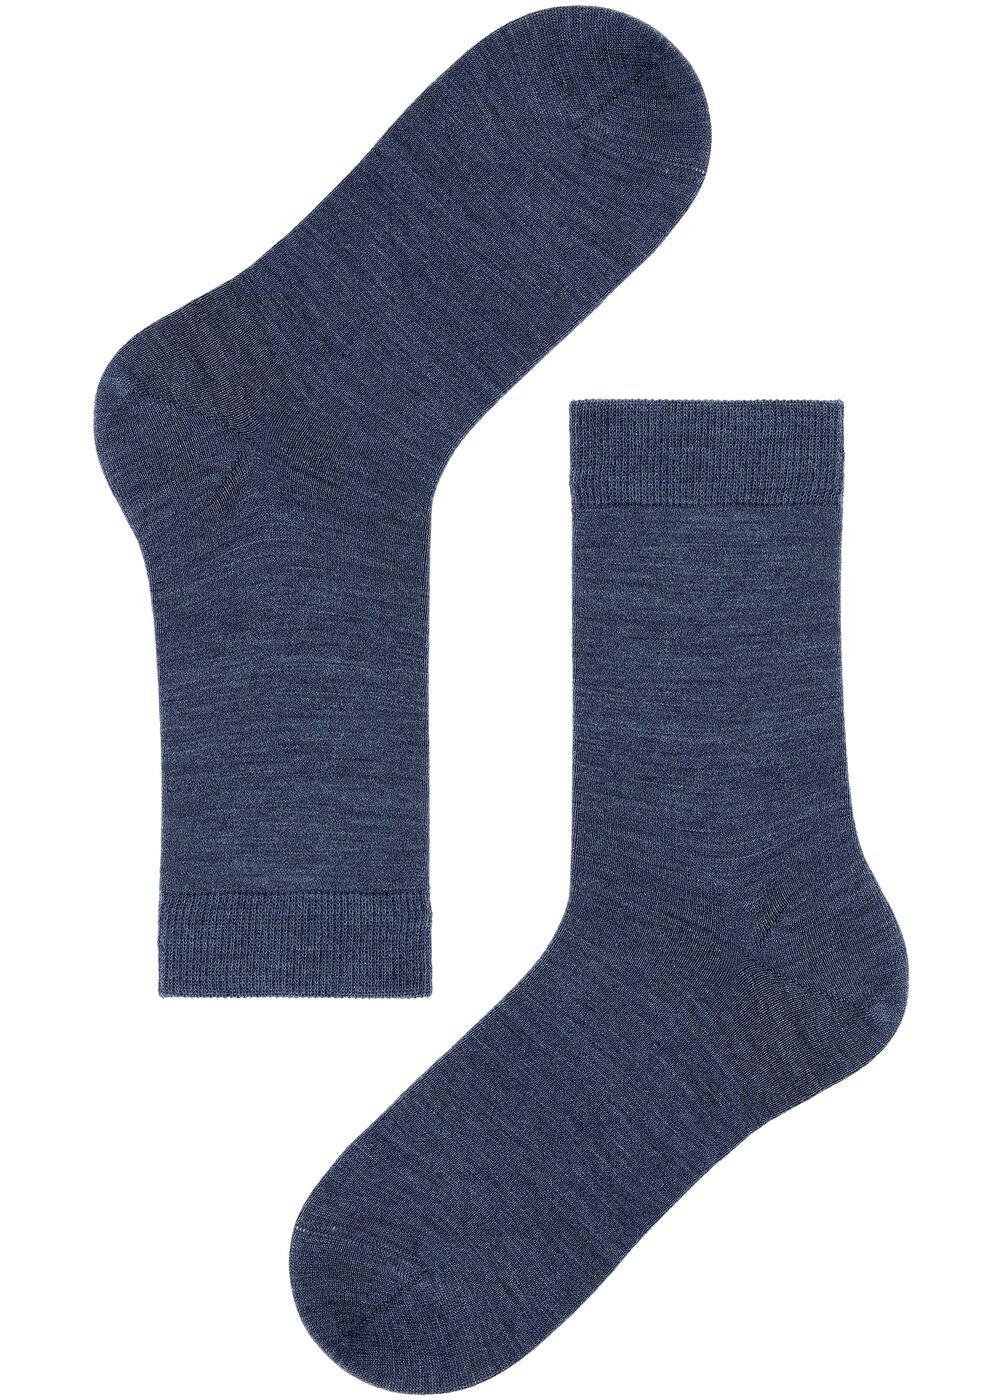 Calzedonia - Navy Short Wool And Cotton Socks